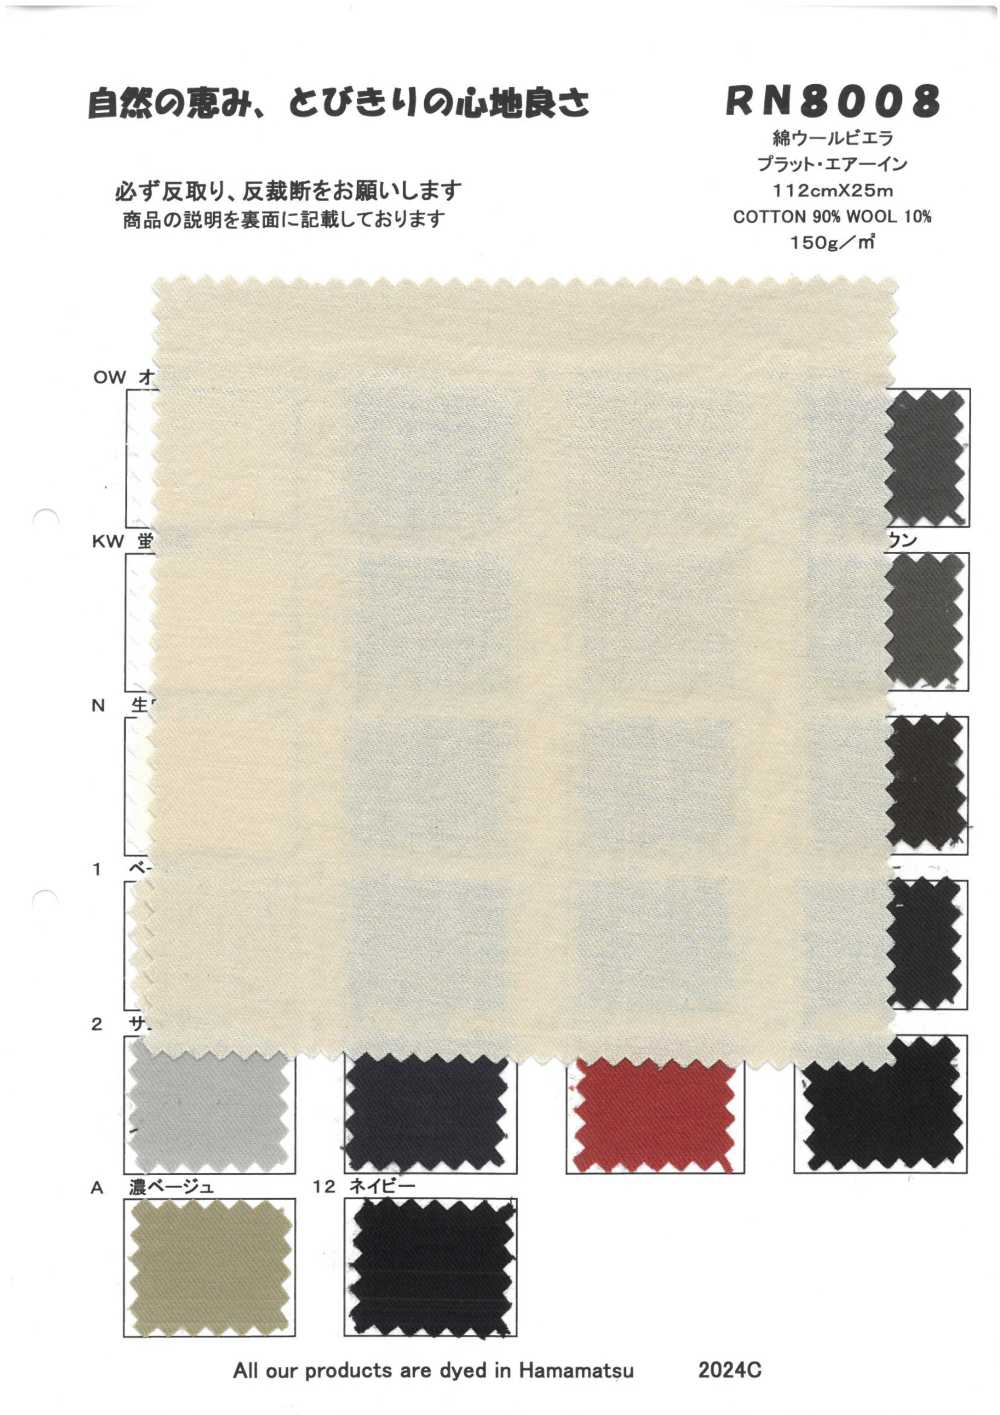 RN8008 Cotton Wool Viella Plat Air In[Textile / Fabric] KOYAMA